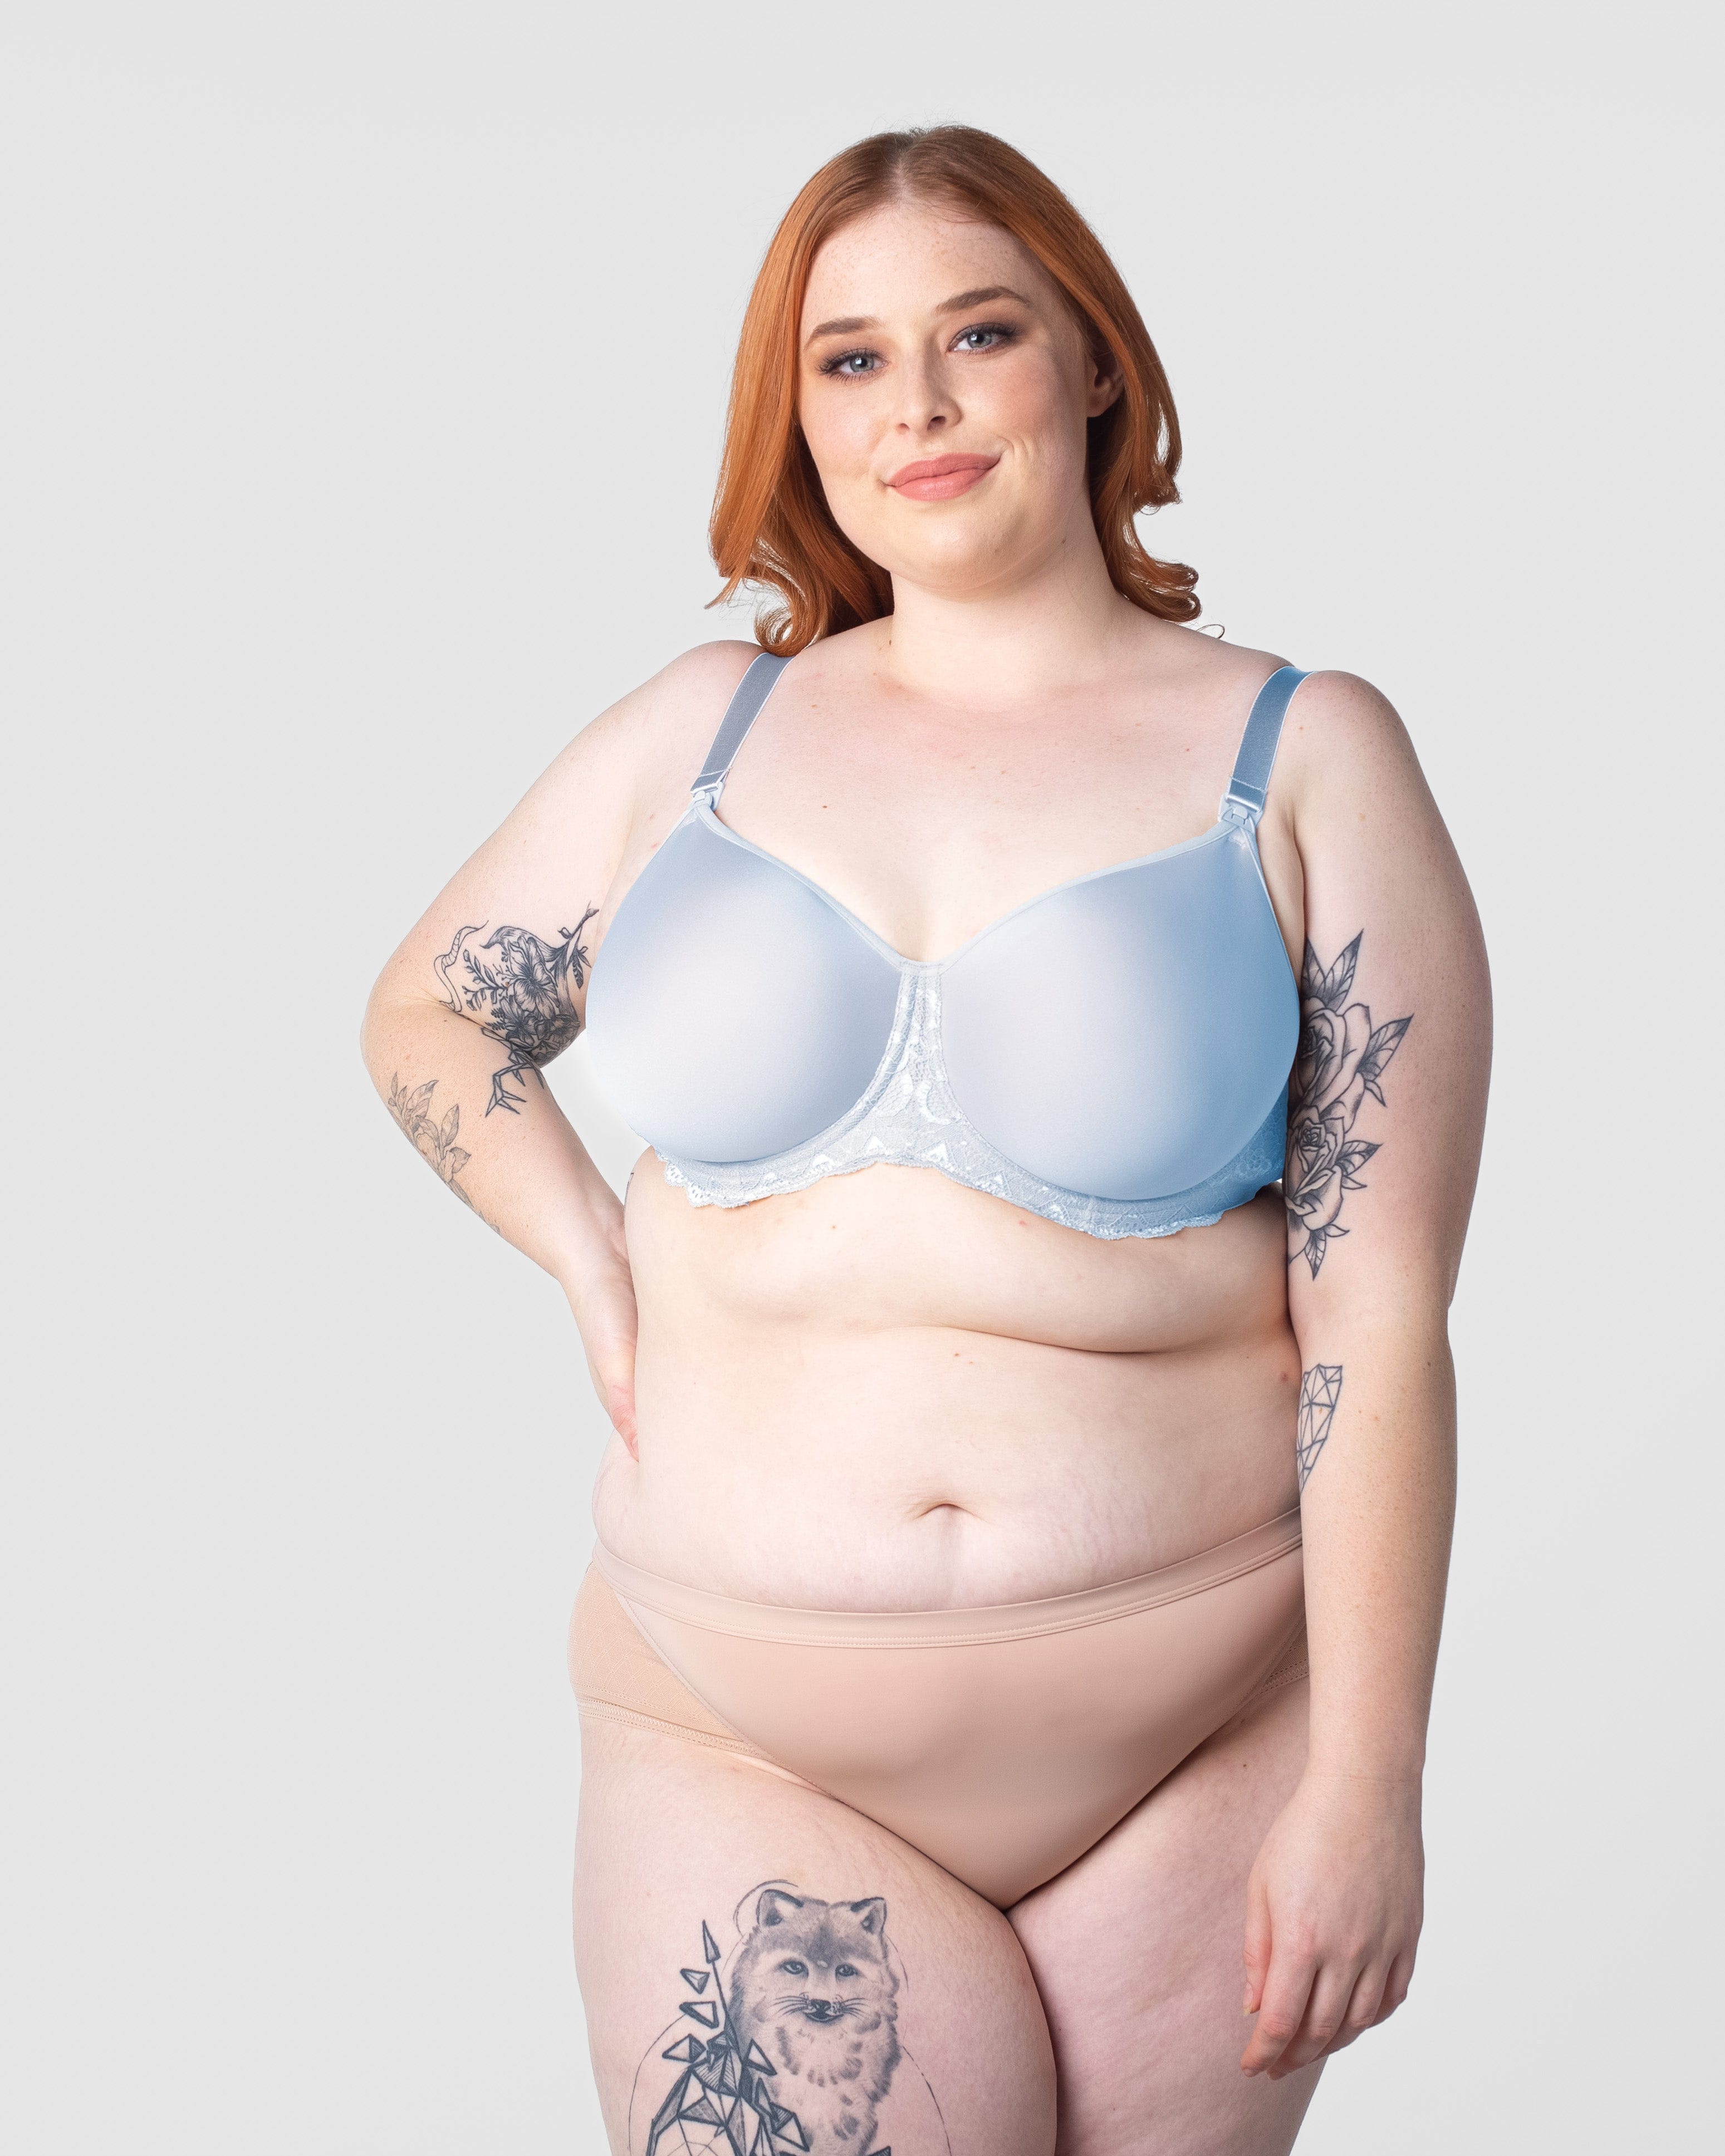 I wear a 32k bra - but I've found the perfect bikini that stills works for  my body